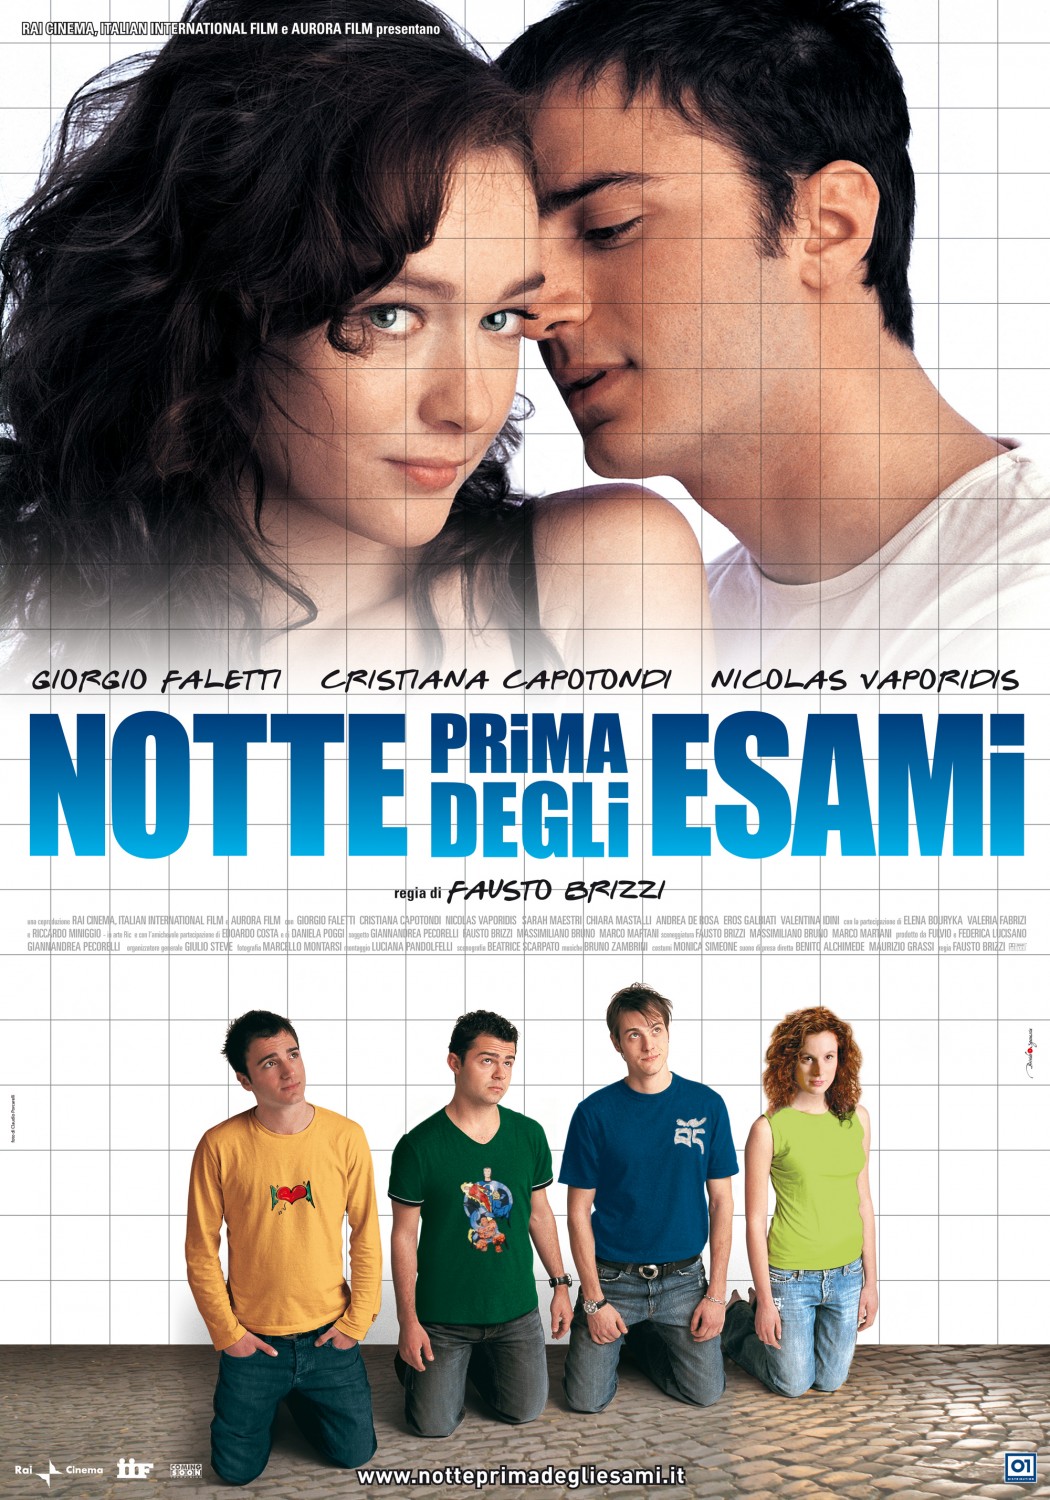 Extra Large Movie Poster Image for Notte prima degli esami 